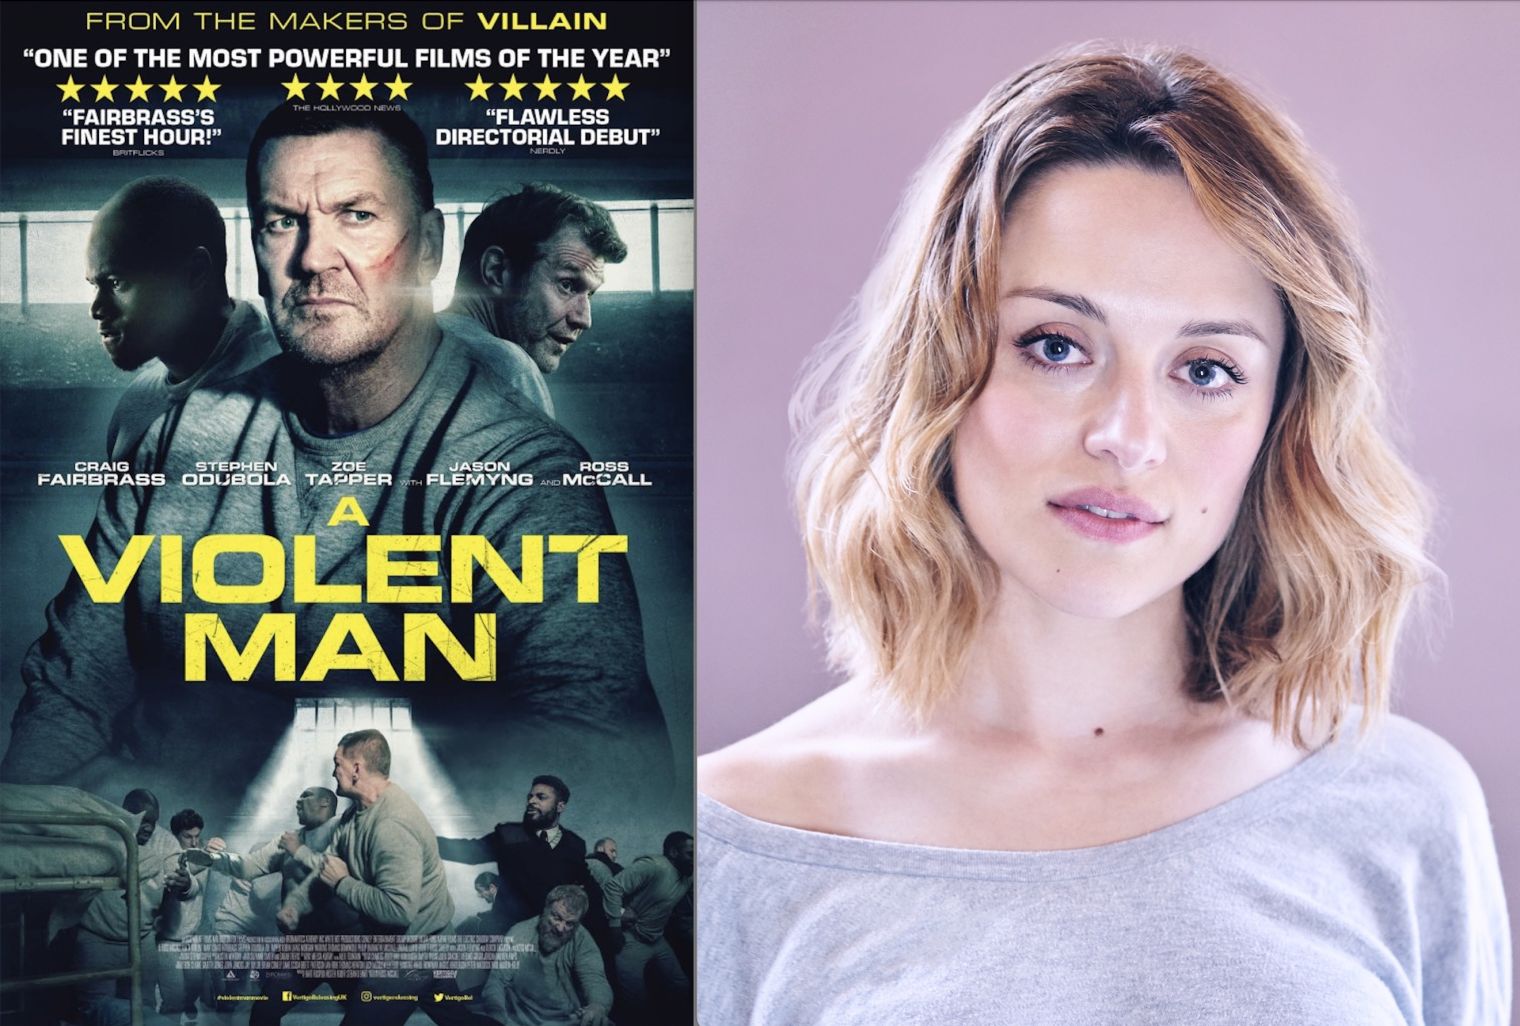 Crime thriller A Violent Man starring Zoë Tapper is released in cinemas nationwide tomorrow